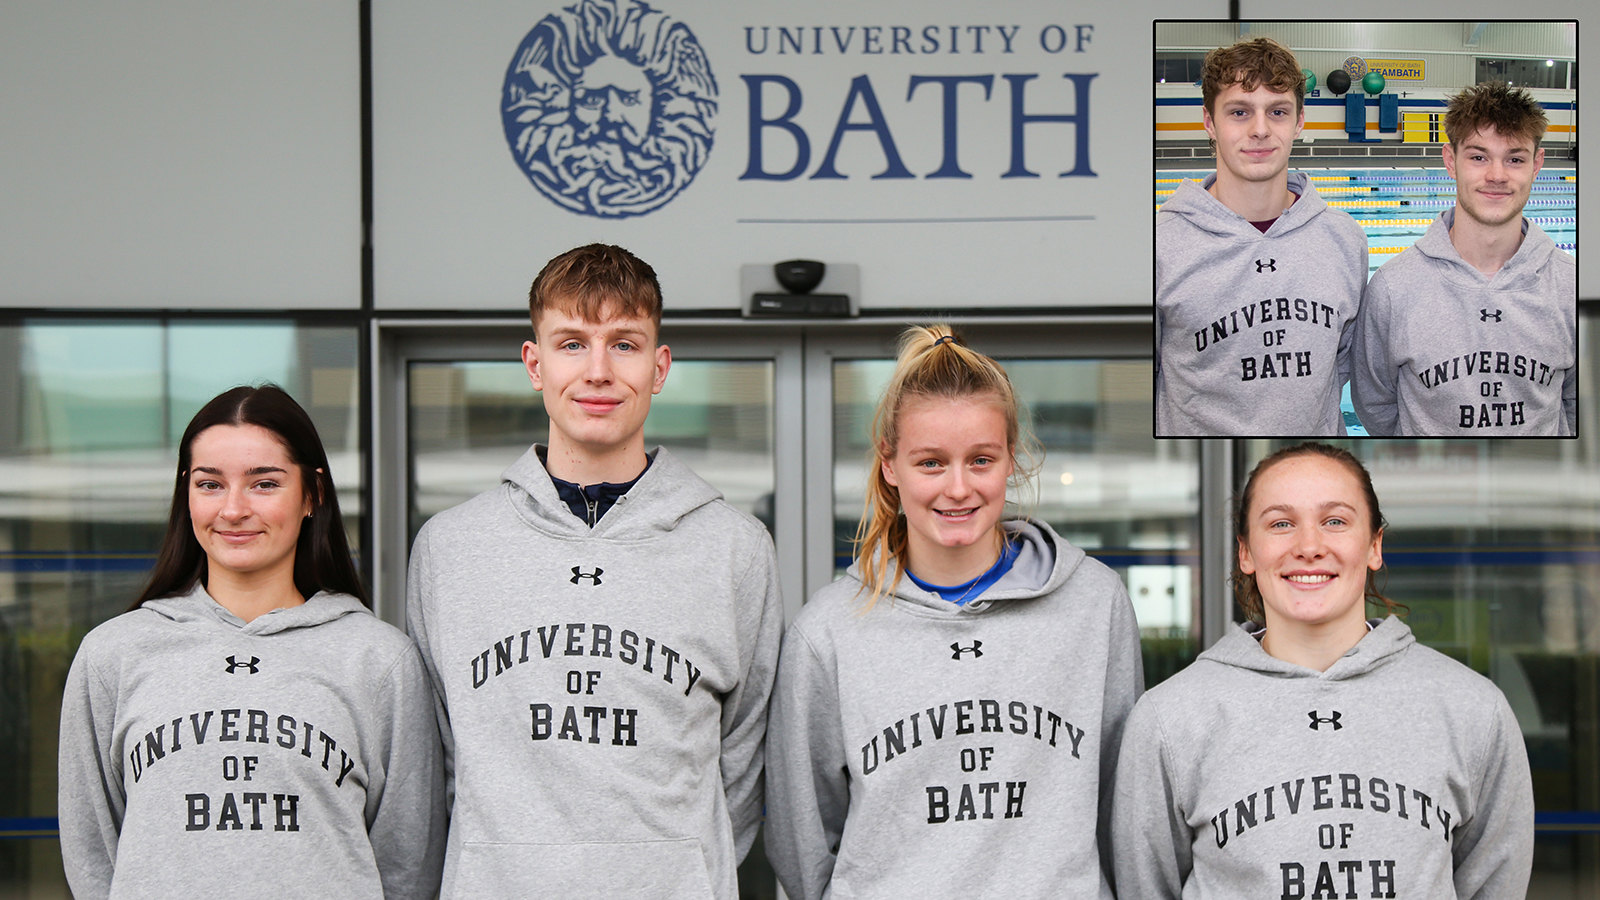 A picture of University of Bath Sporting Scholars Alanna Pullen, Luke Ball, Ella Fullman, Jenny Hesketh, Jack Skerry and Robbie Hemmings